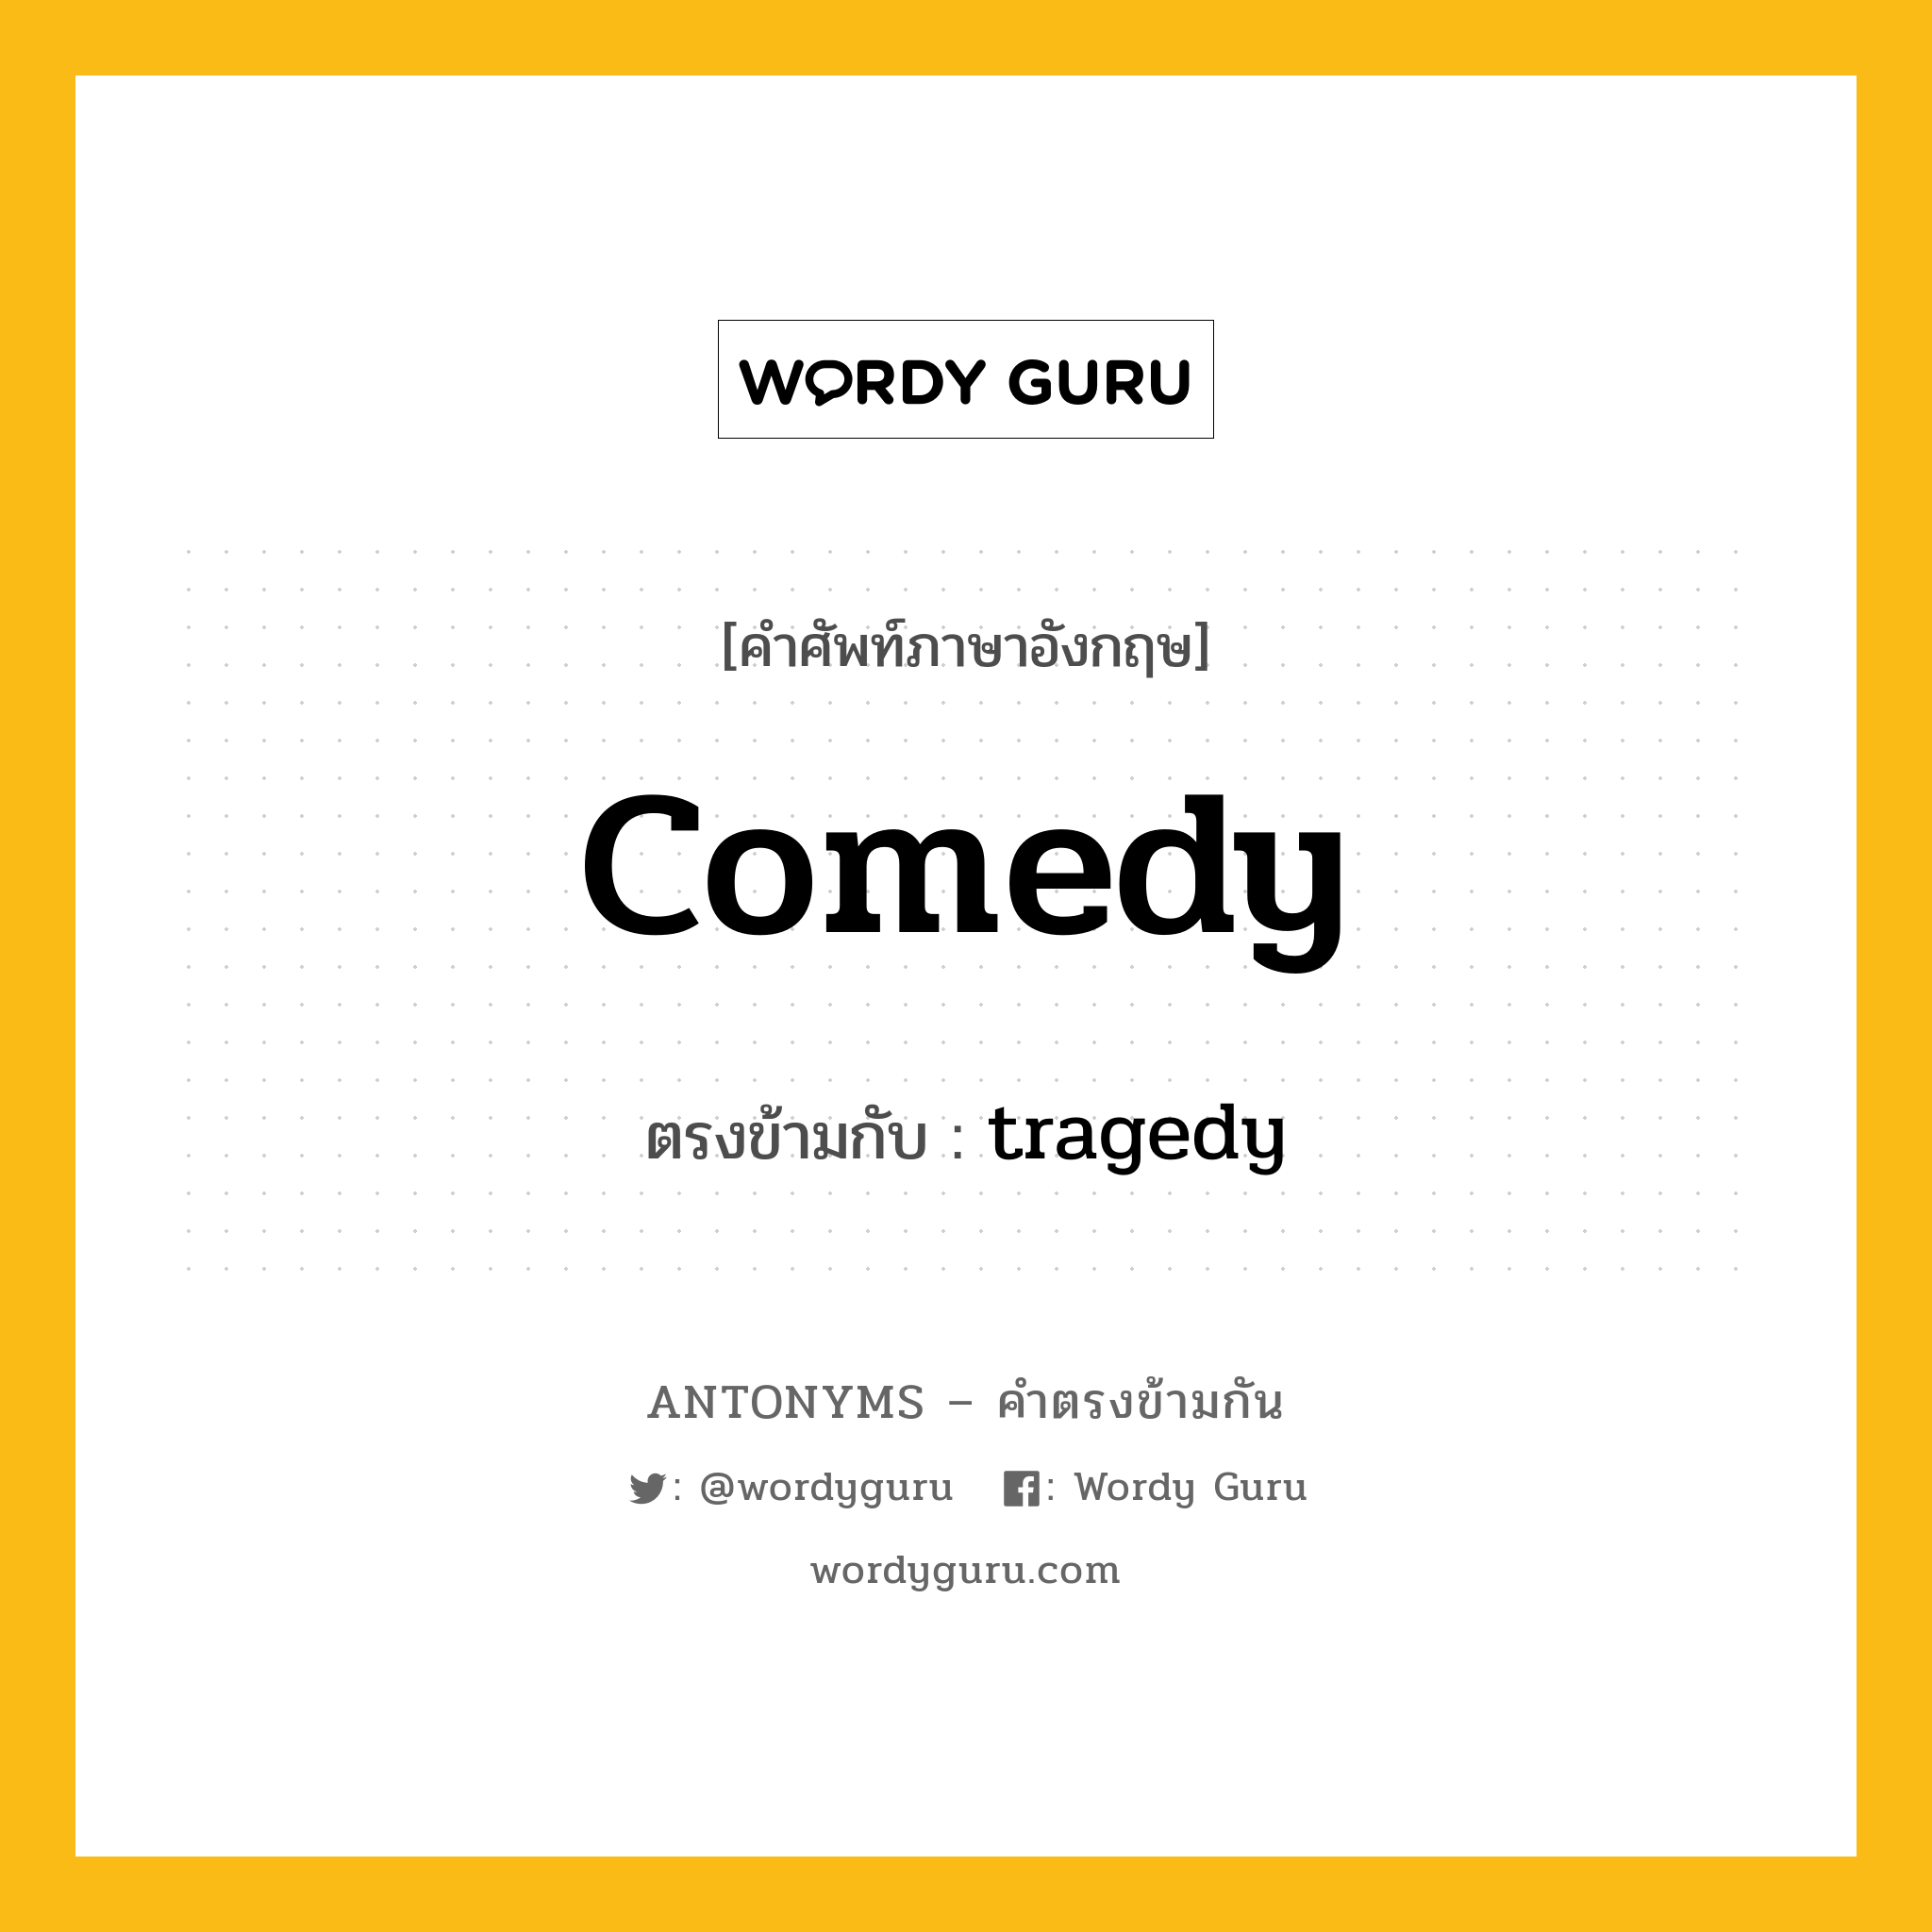 comedy เป็นคำตรงข้ามกับคำไหนบ้าง?, คำศัพท์ภาษาอังกฤษ comedy ตรงข้ามกับ tragedy หมวด tragedy